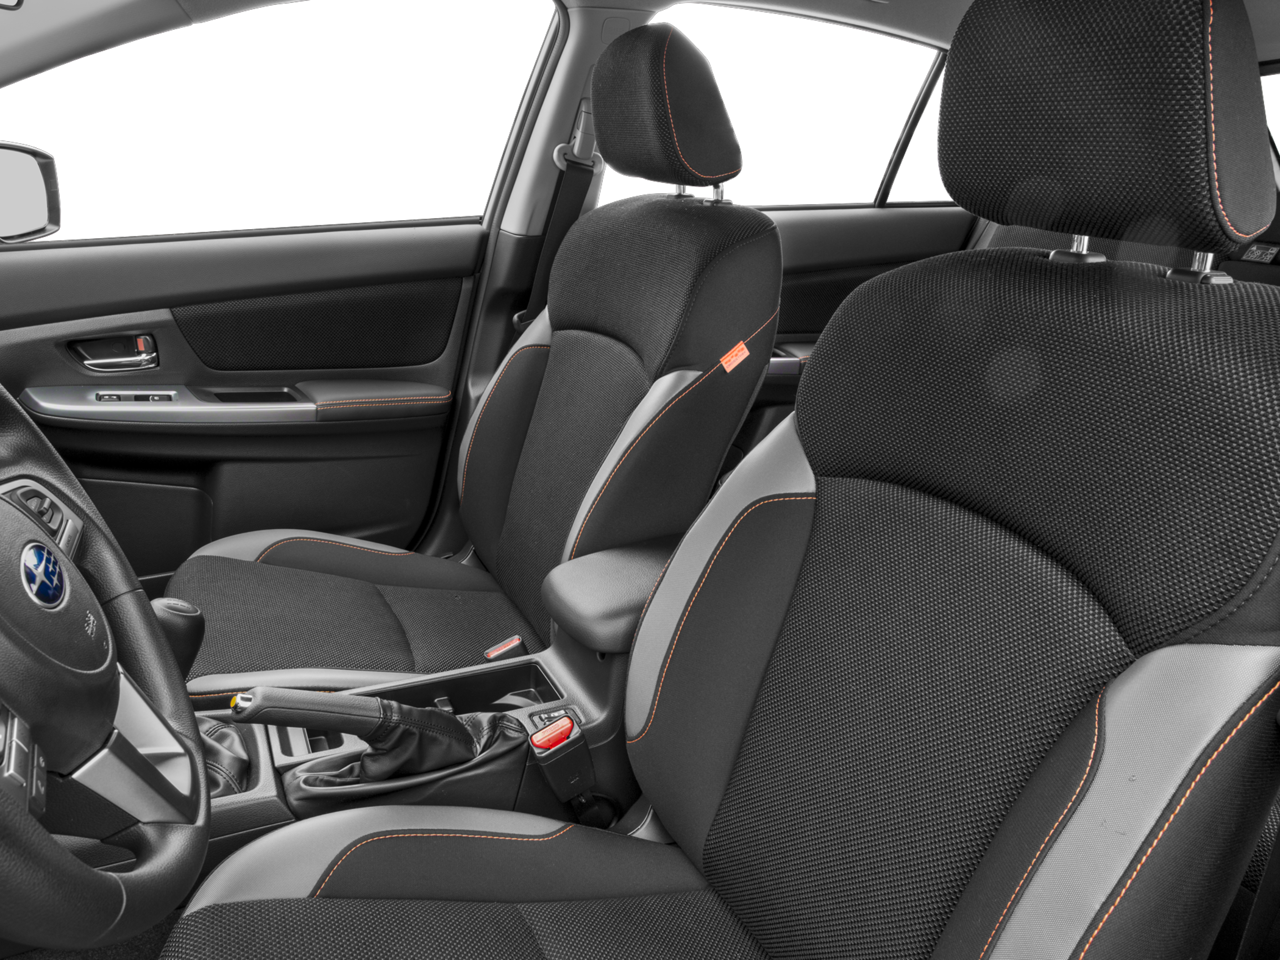 2016 Subaru Crosstrek 5dr CVT 2.0i Premium